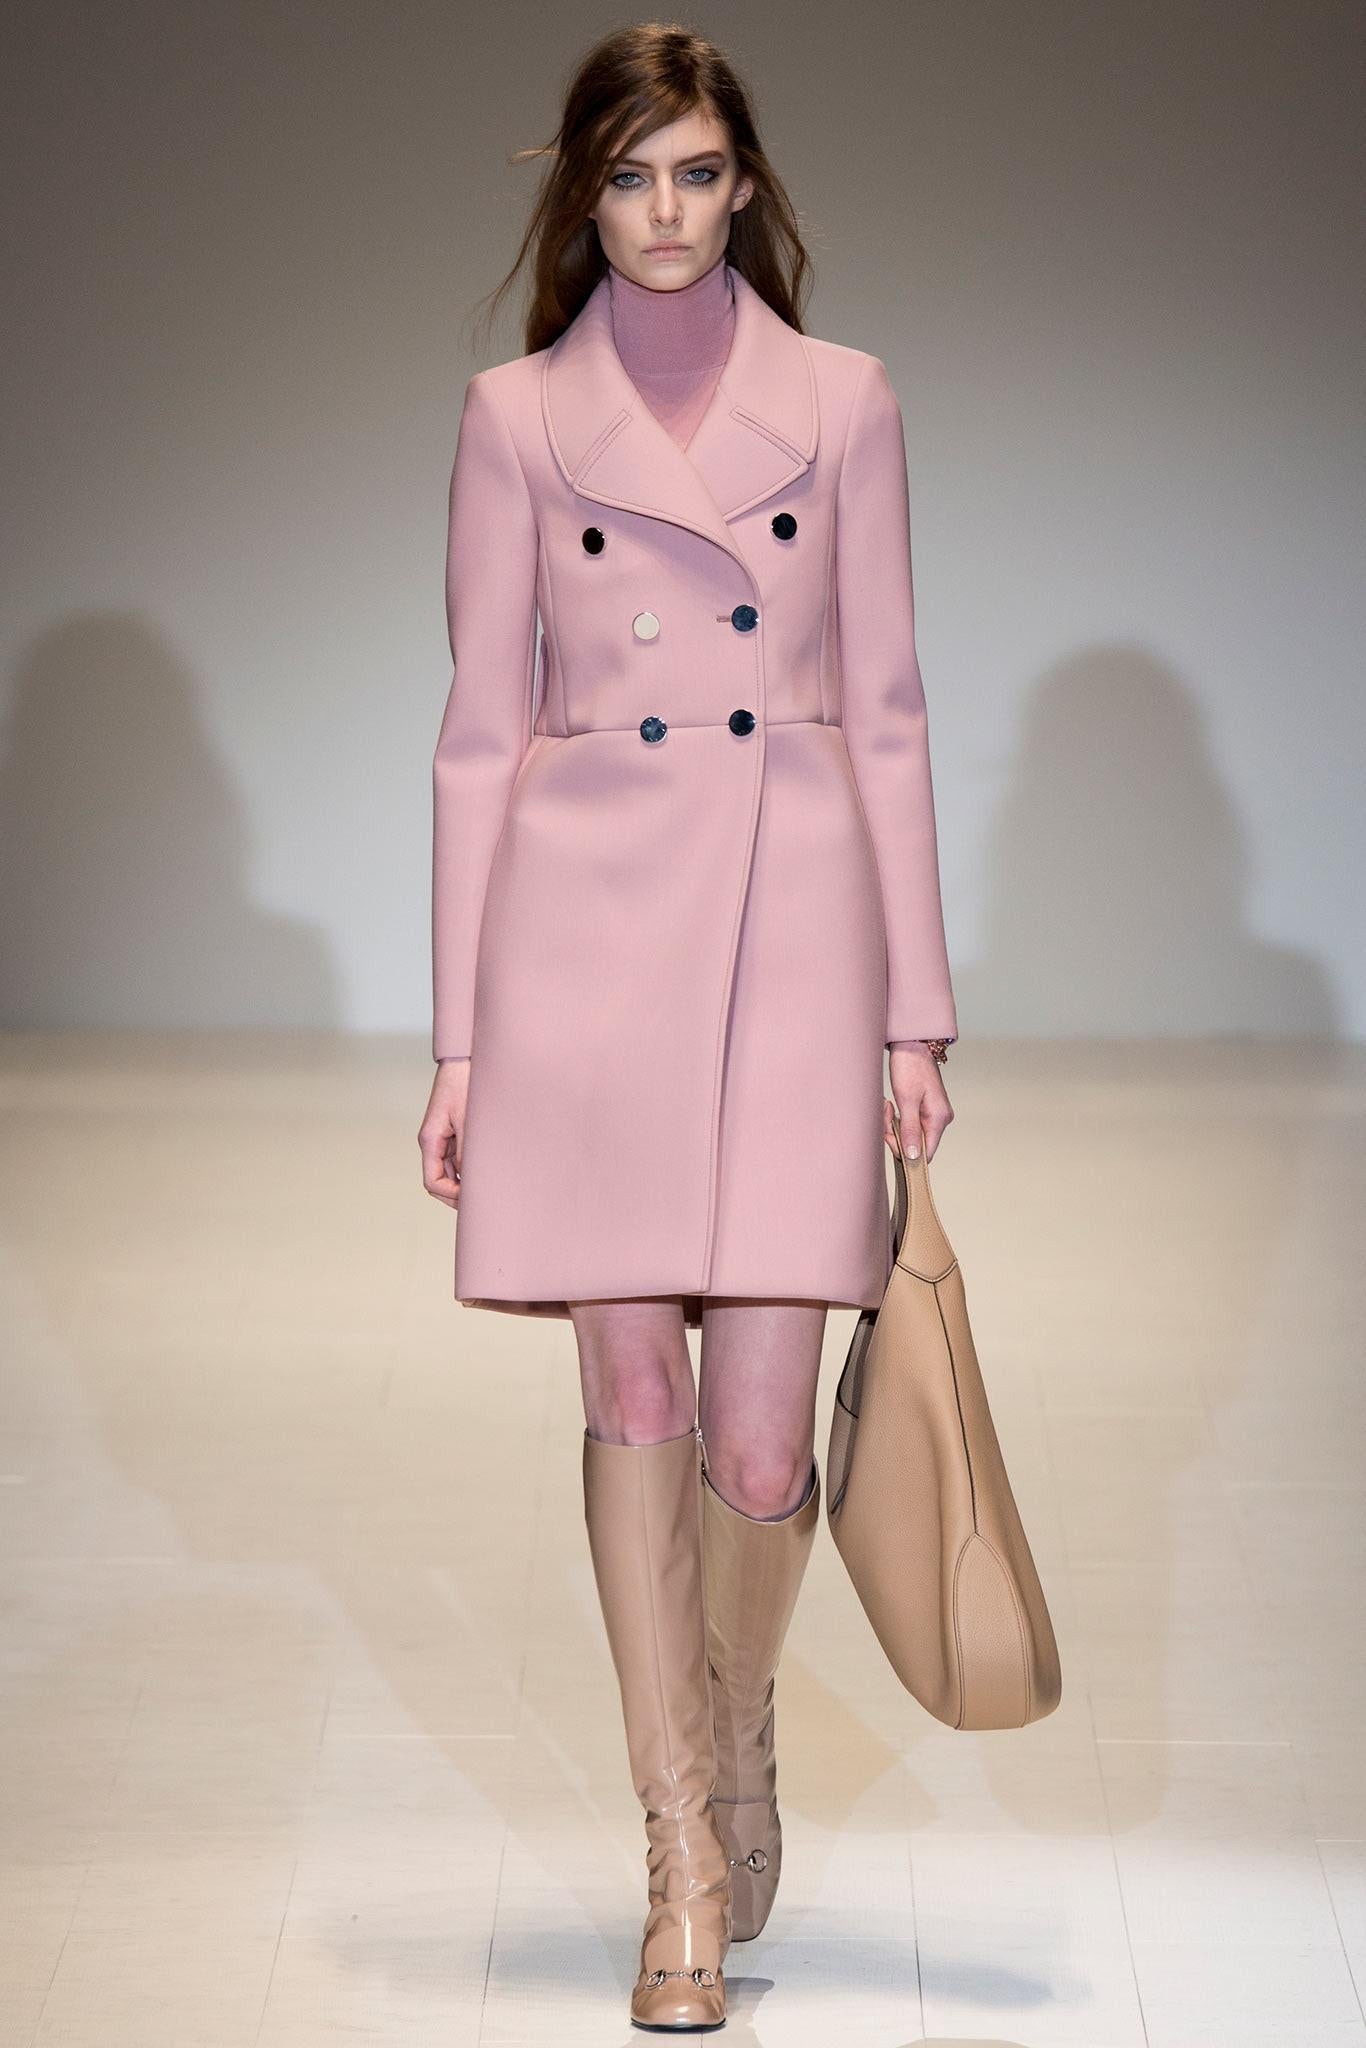 Rose Nouveauté Gucci extra large sac Jackie O Gaga en cuir rose 3595 $ automne 2014 en vente